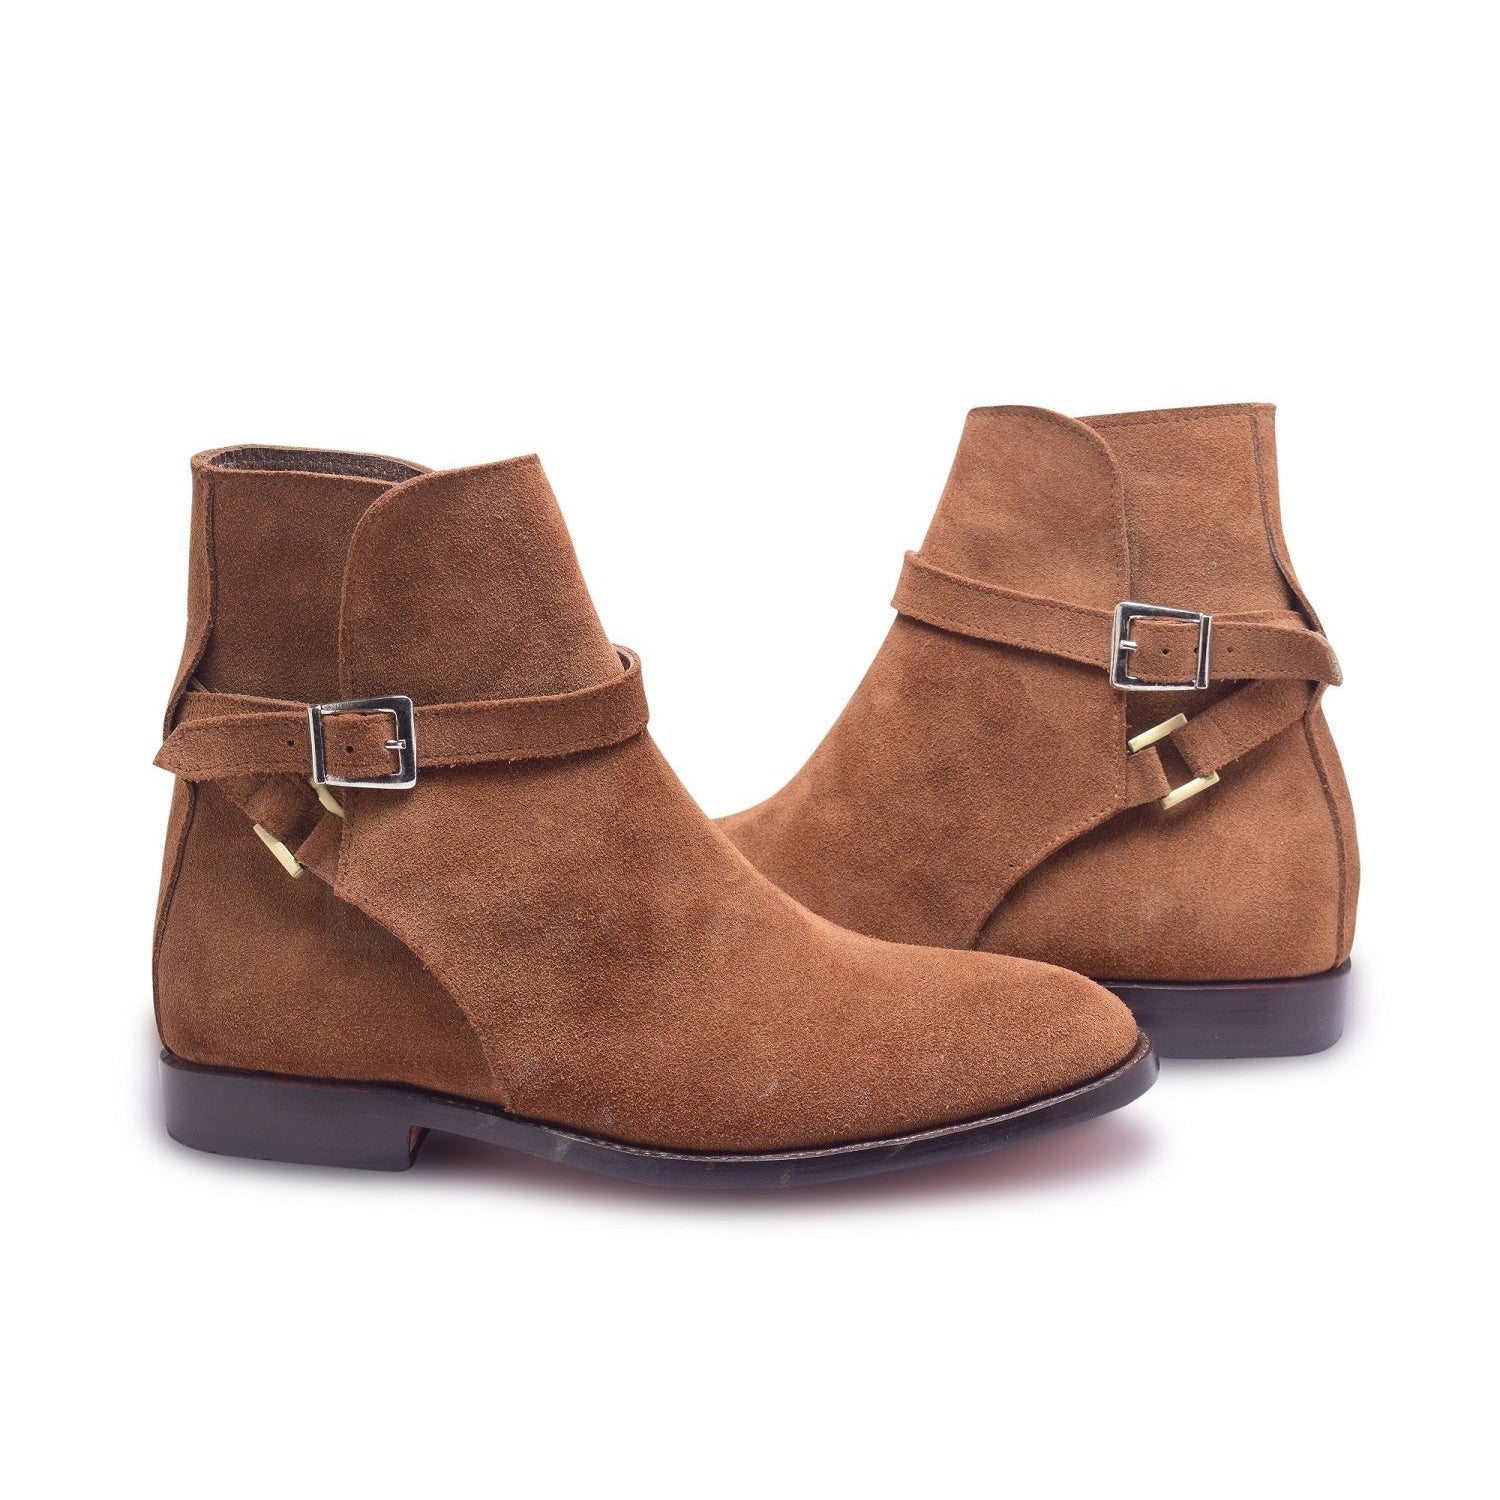 Brown Jodhpurs Boots for Men